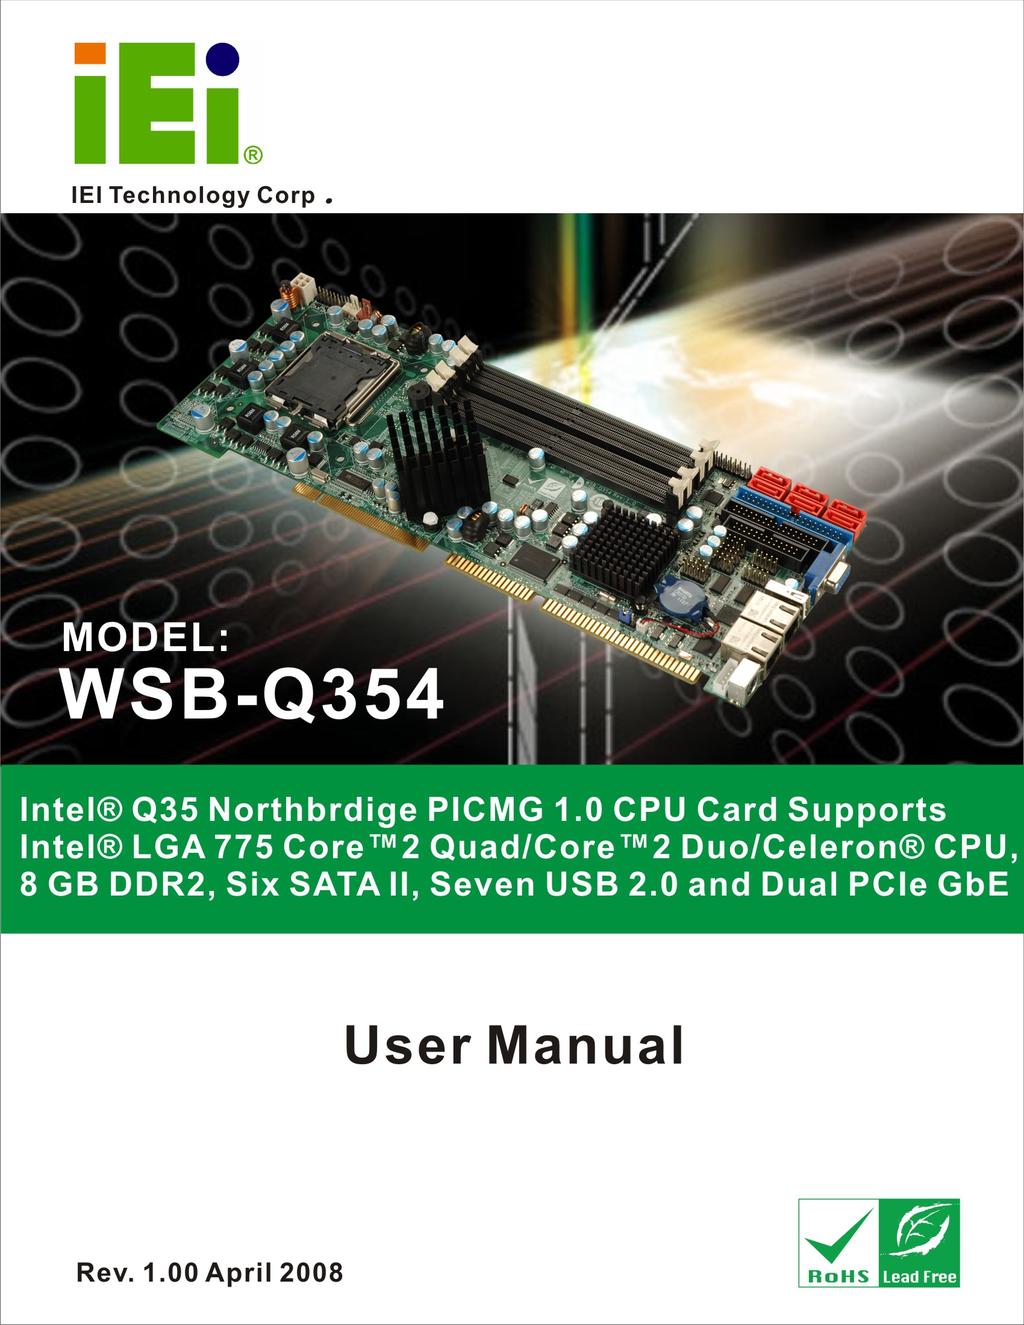 WSB-Q354 PICMG 1.